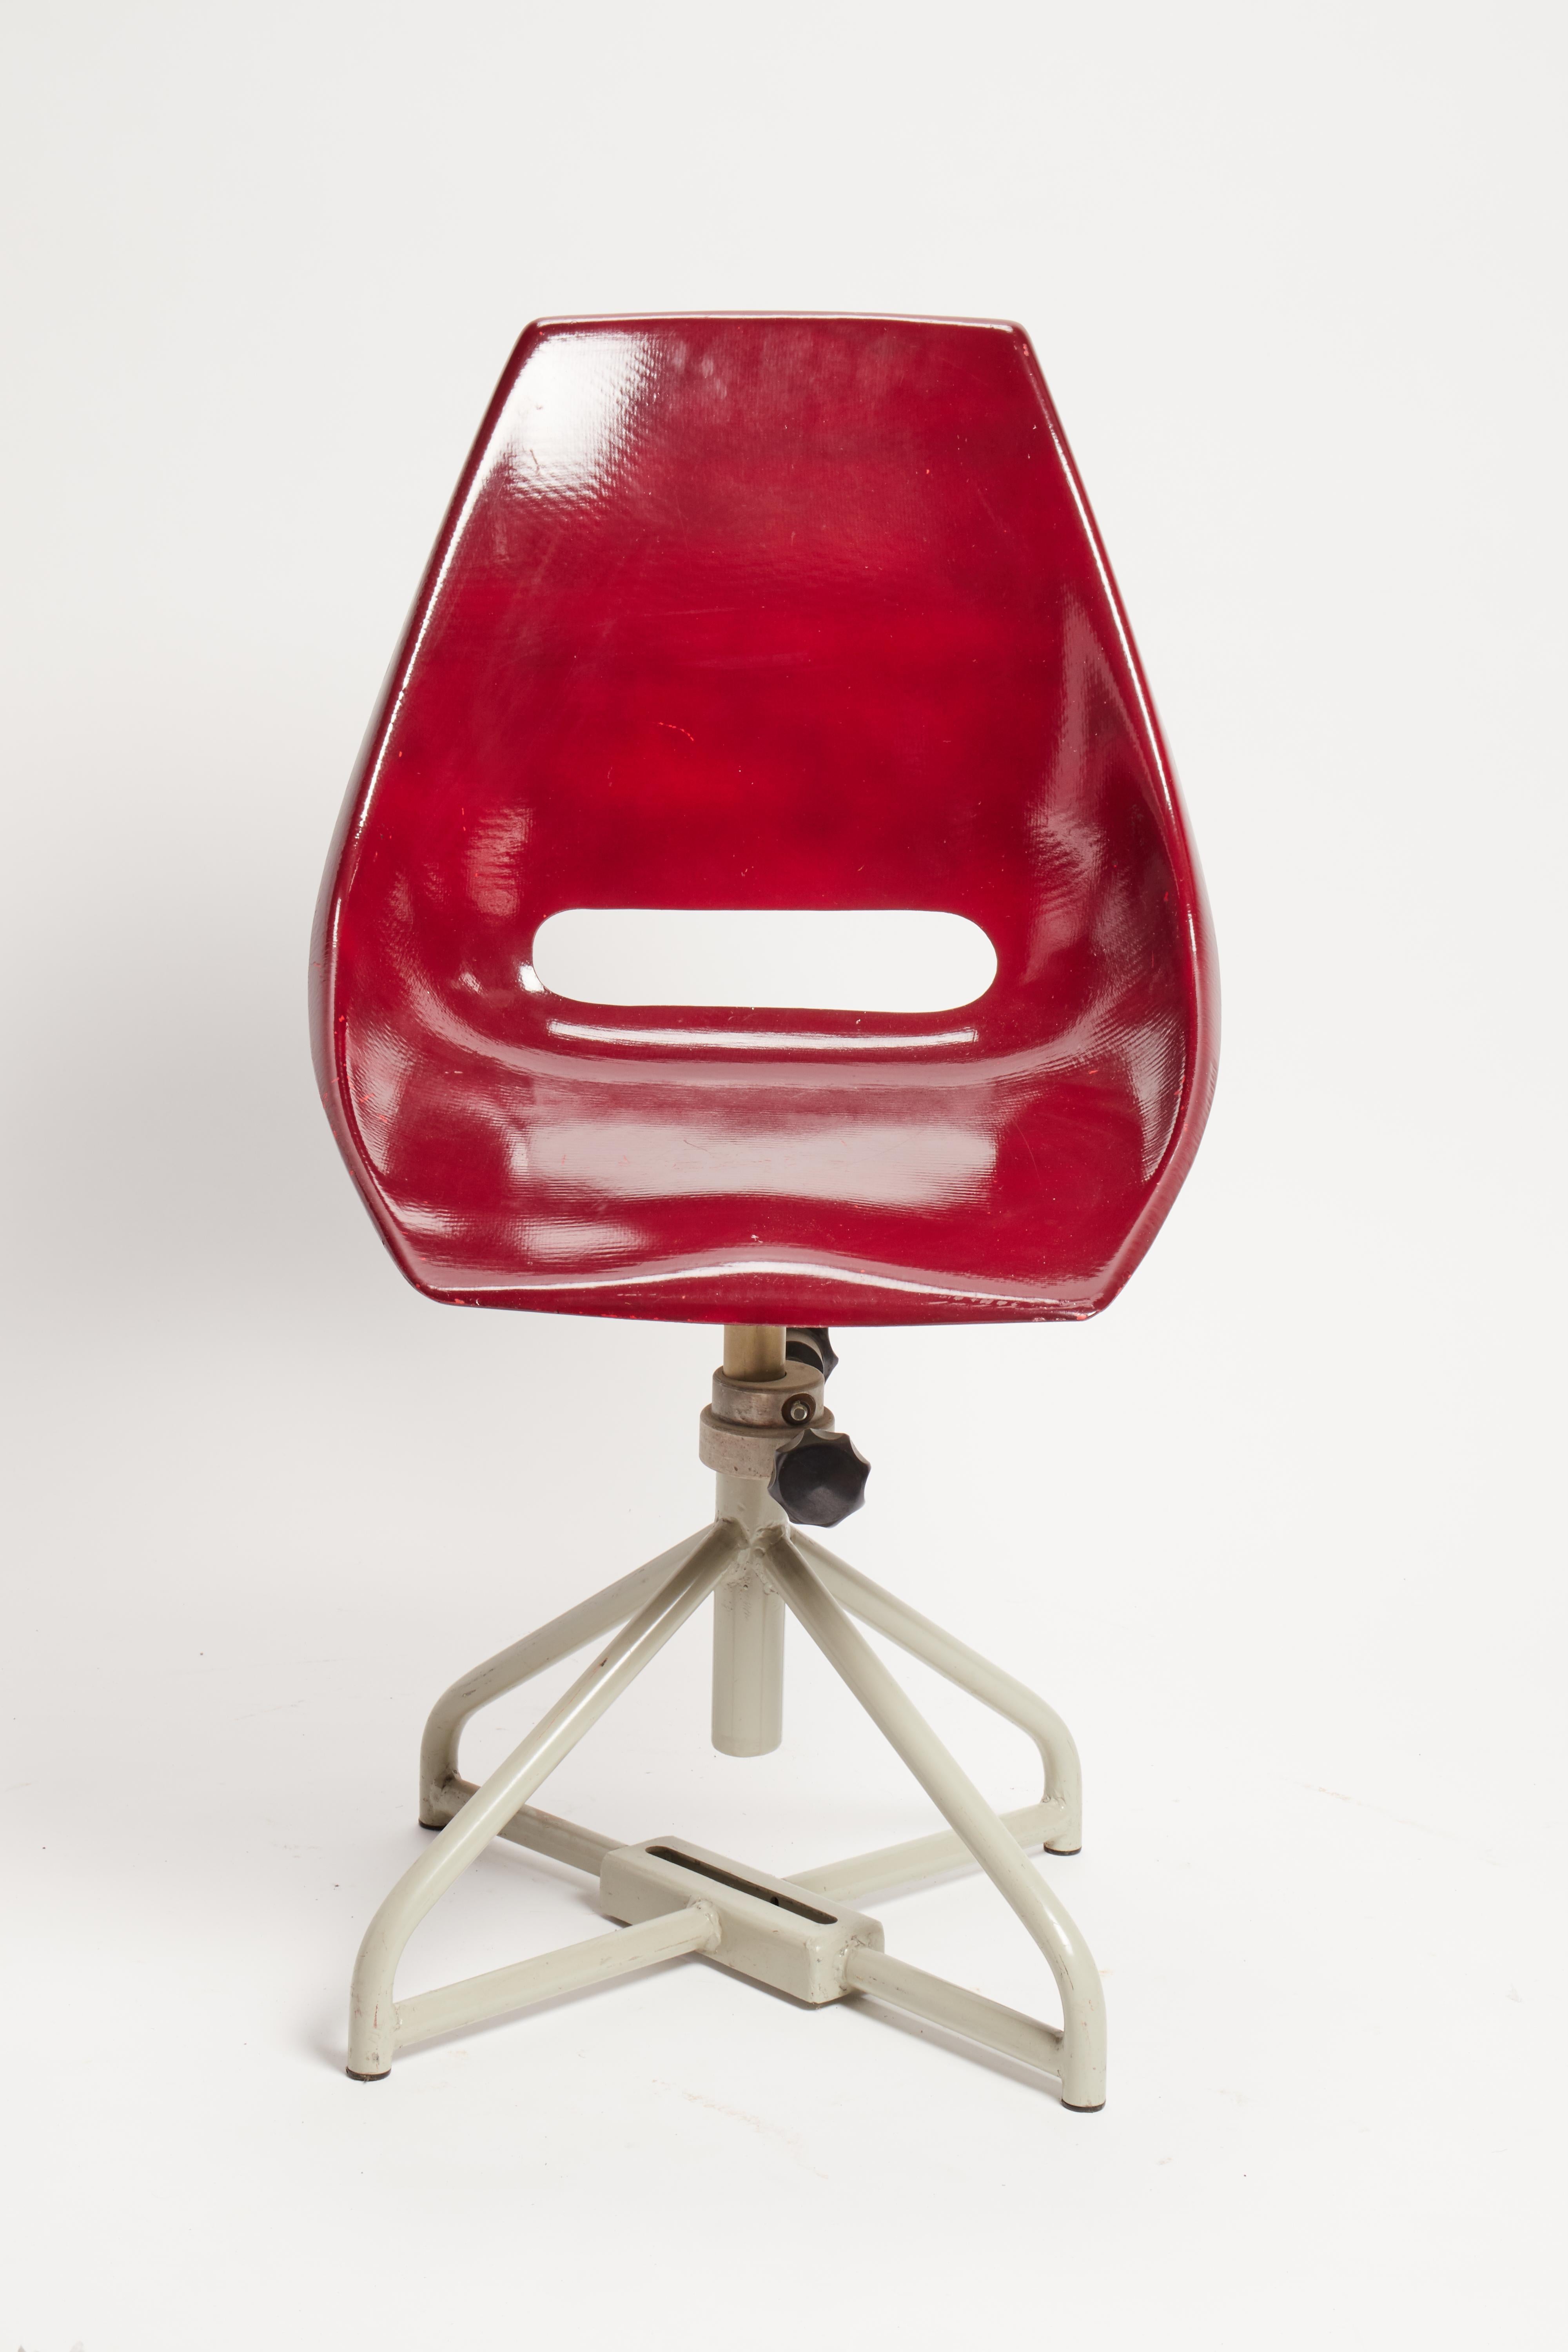 Italian Multicolor Adjustable Fiberglass Chairs, Italy, 1950 For Sale